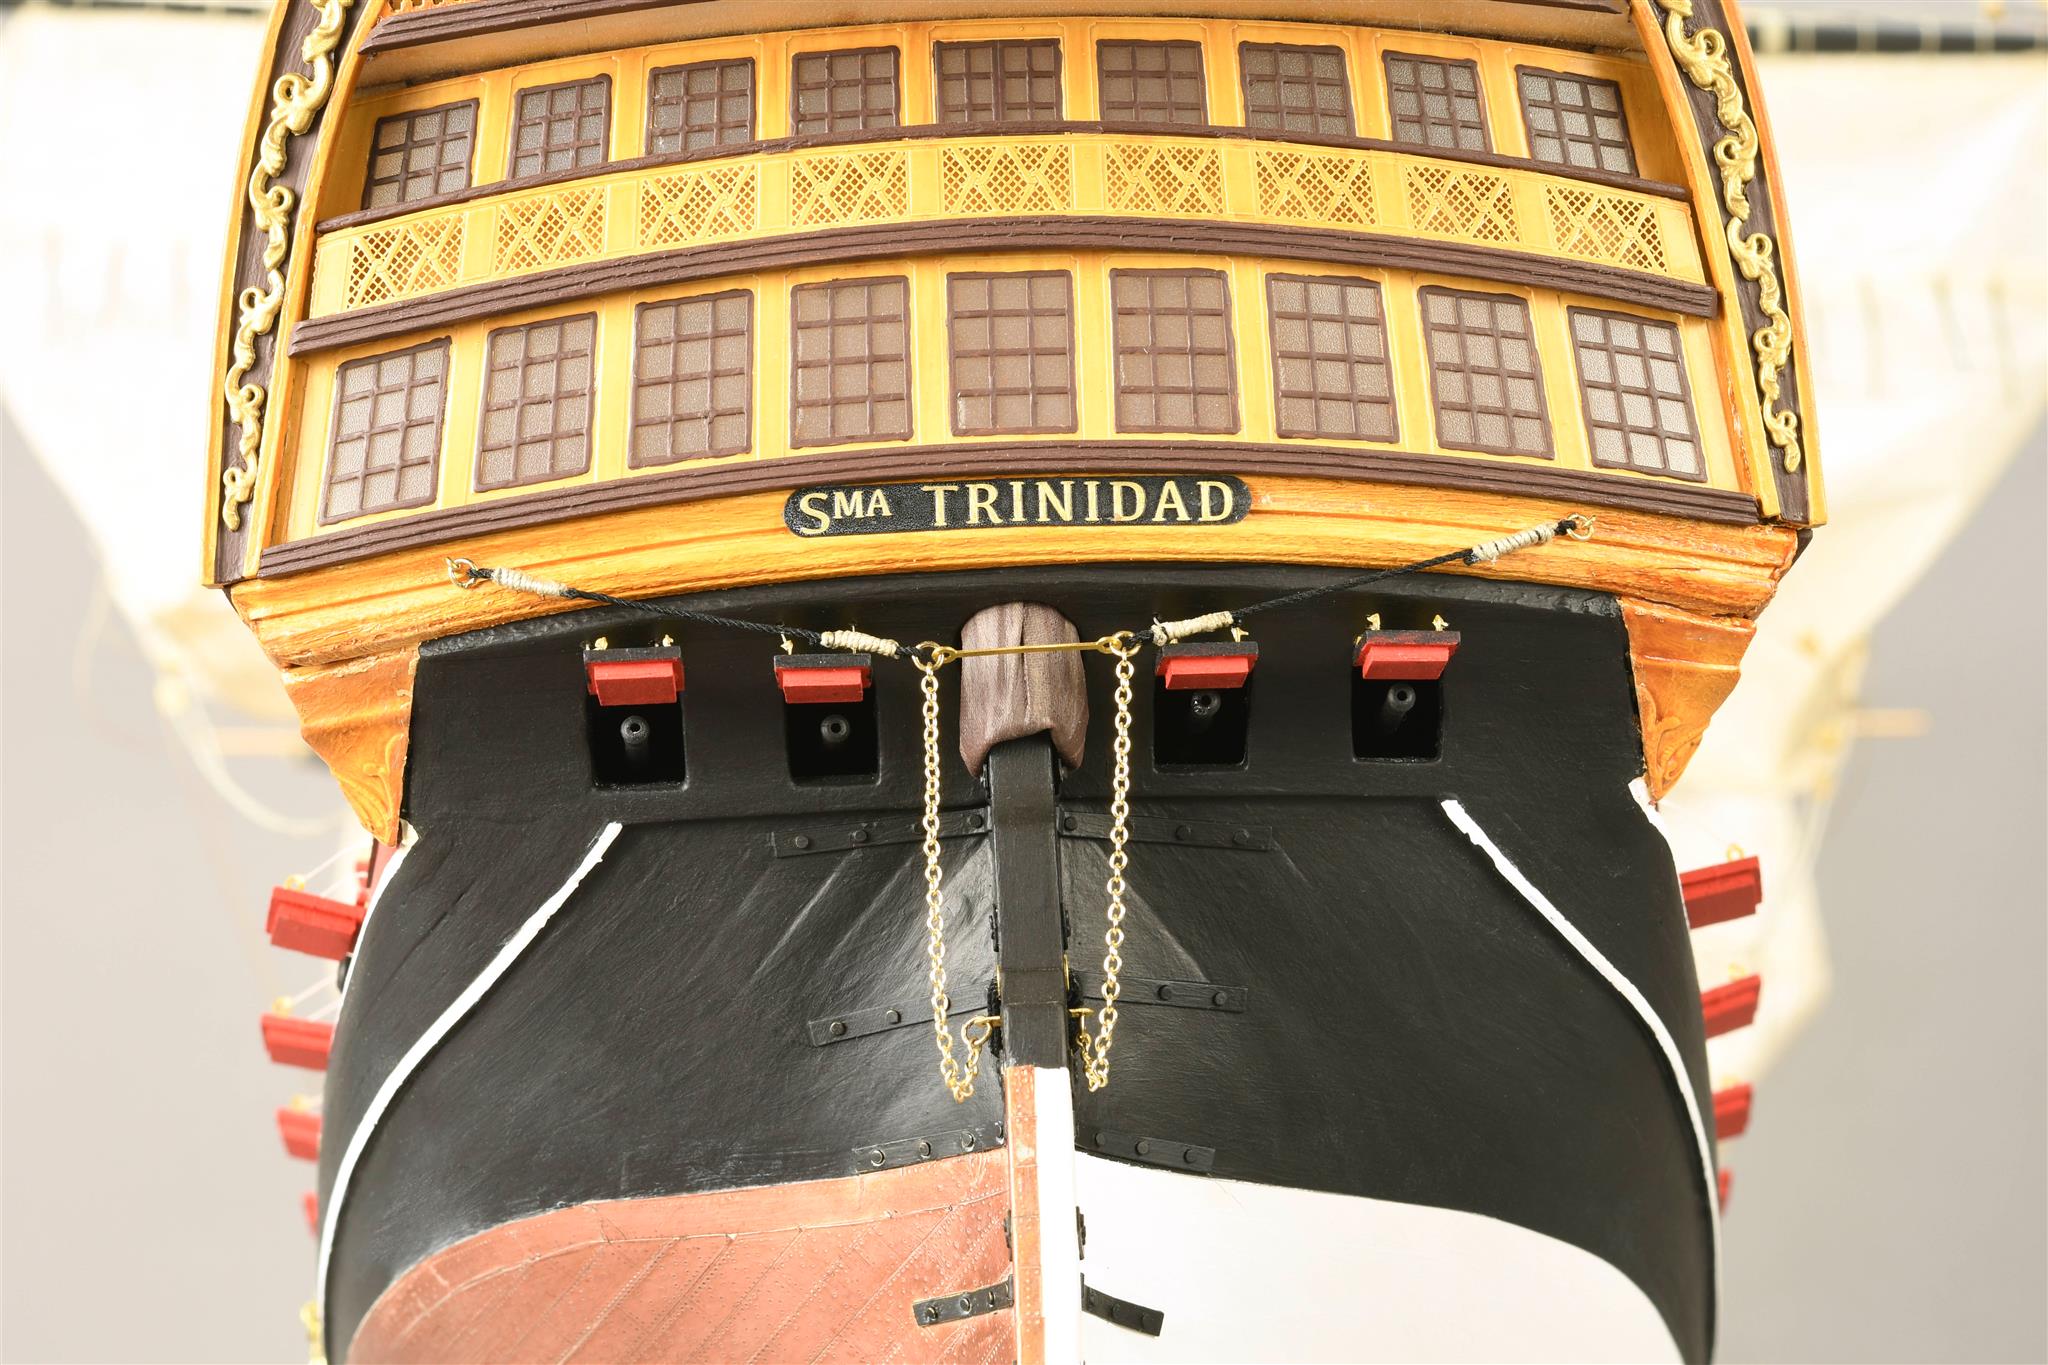 Model Ship Santisima Trinidad in Wood Trafalgar 1805 Edition at 1:84 Scale (22901) by Artesanía Latina.